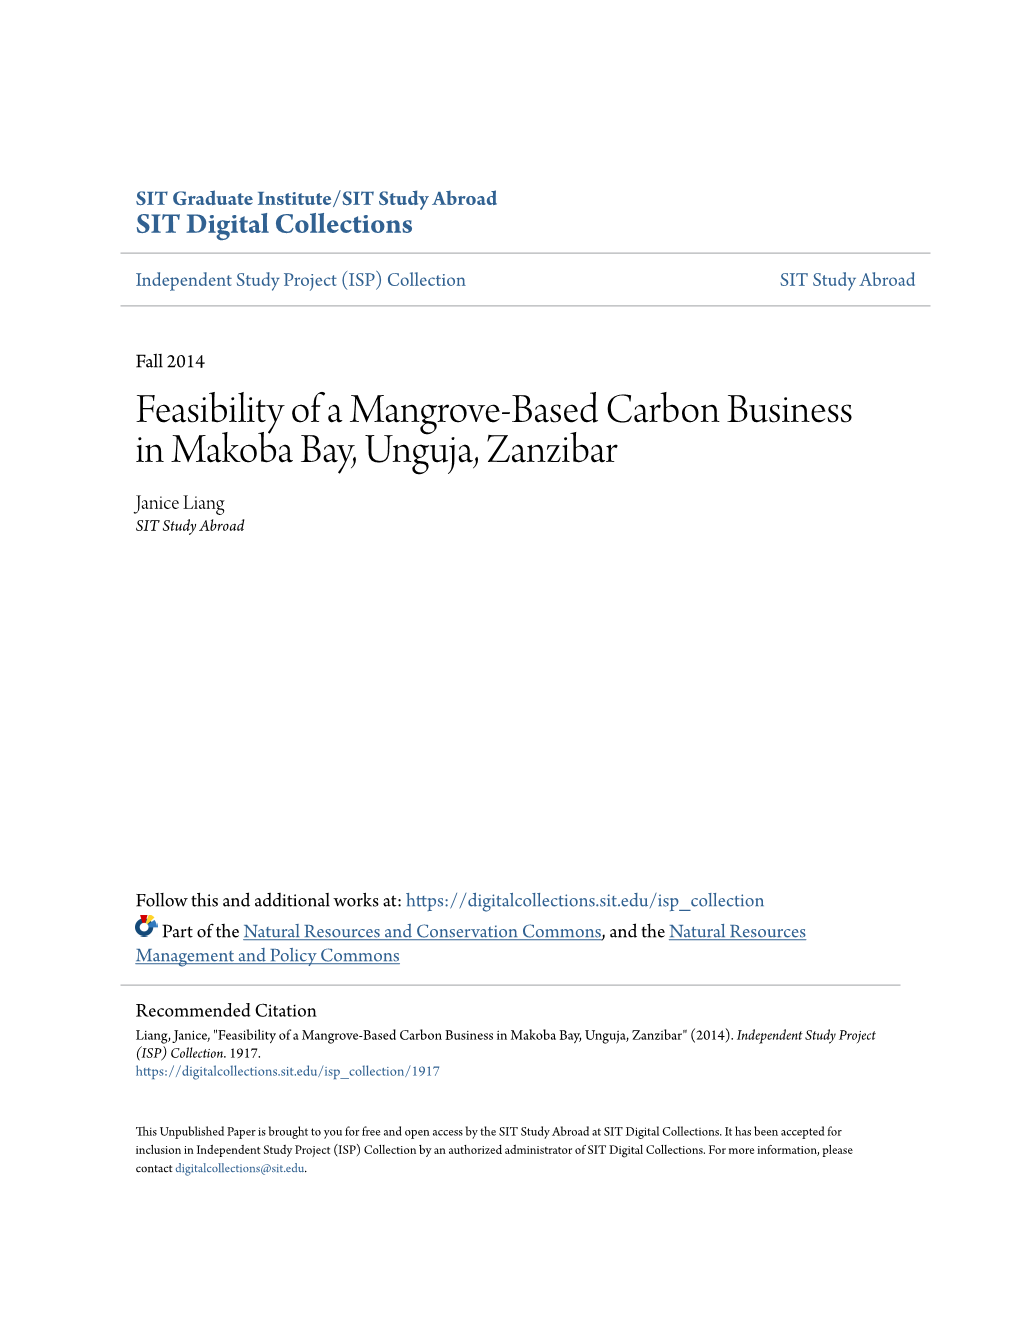 Feasibility of a Mangrove-Based Carbon Business in Makoba Bay, Unguja, Zanzibar Janice Liang SIT Study Abroad